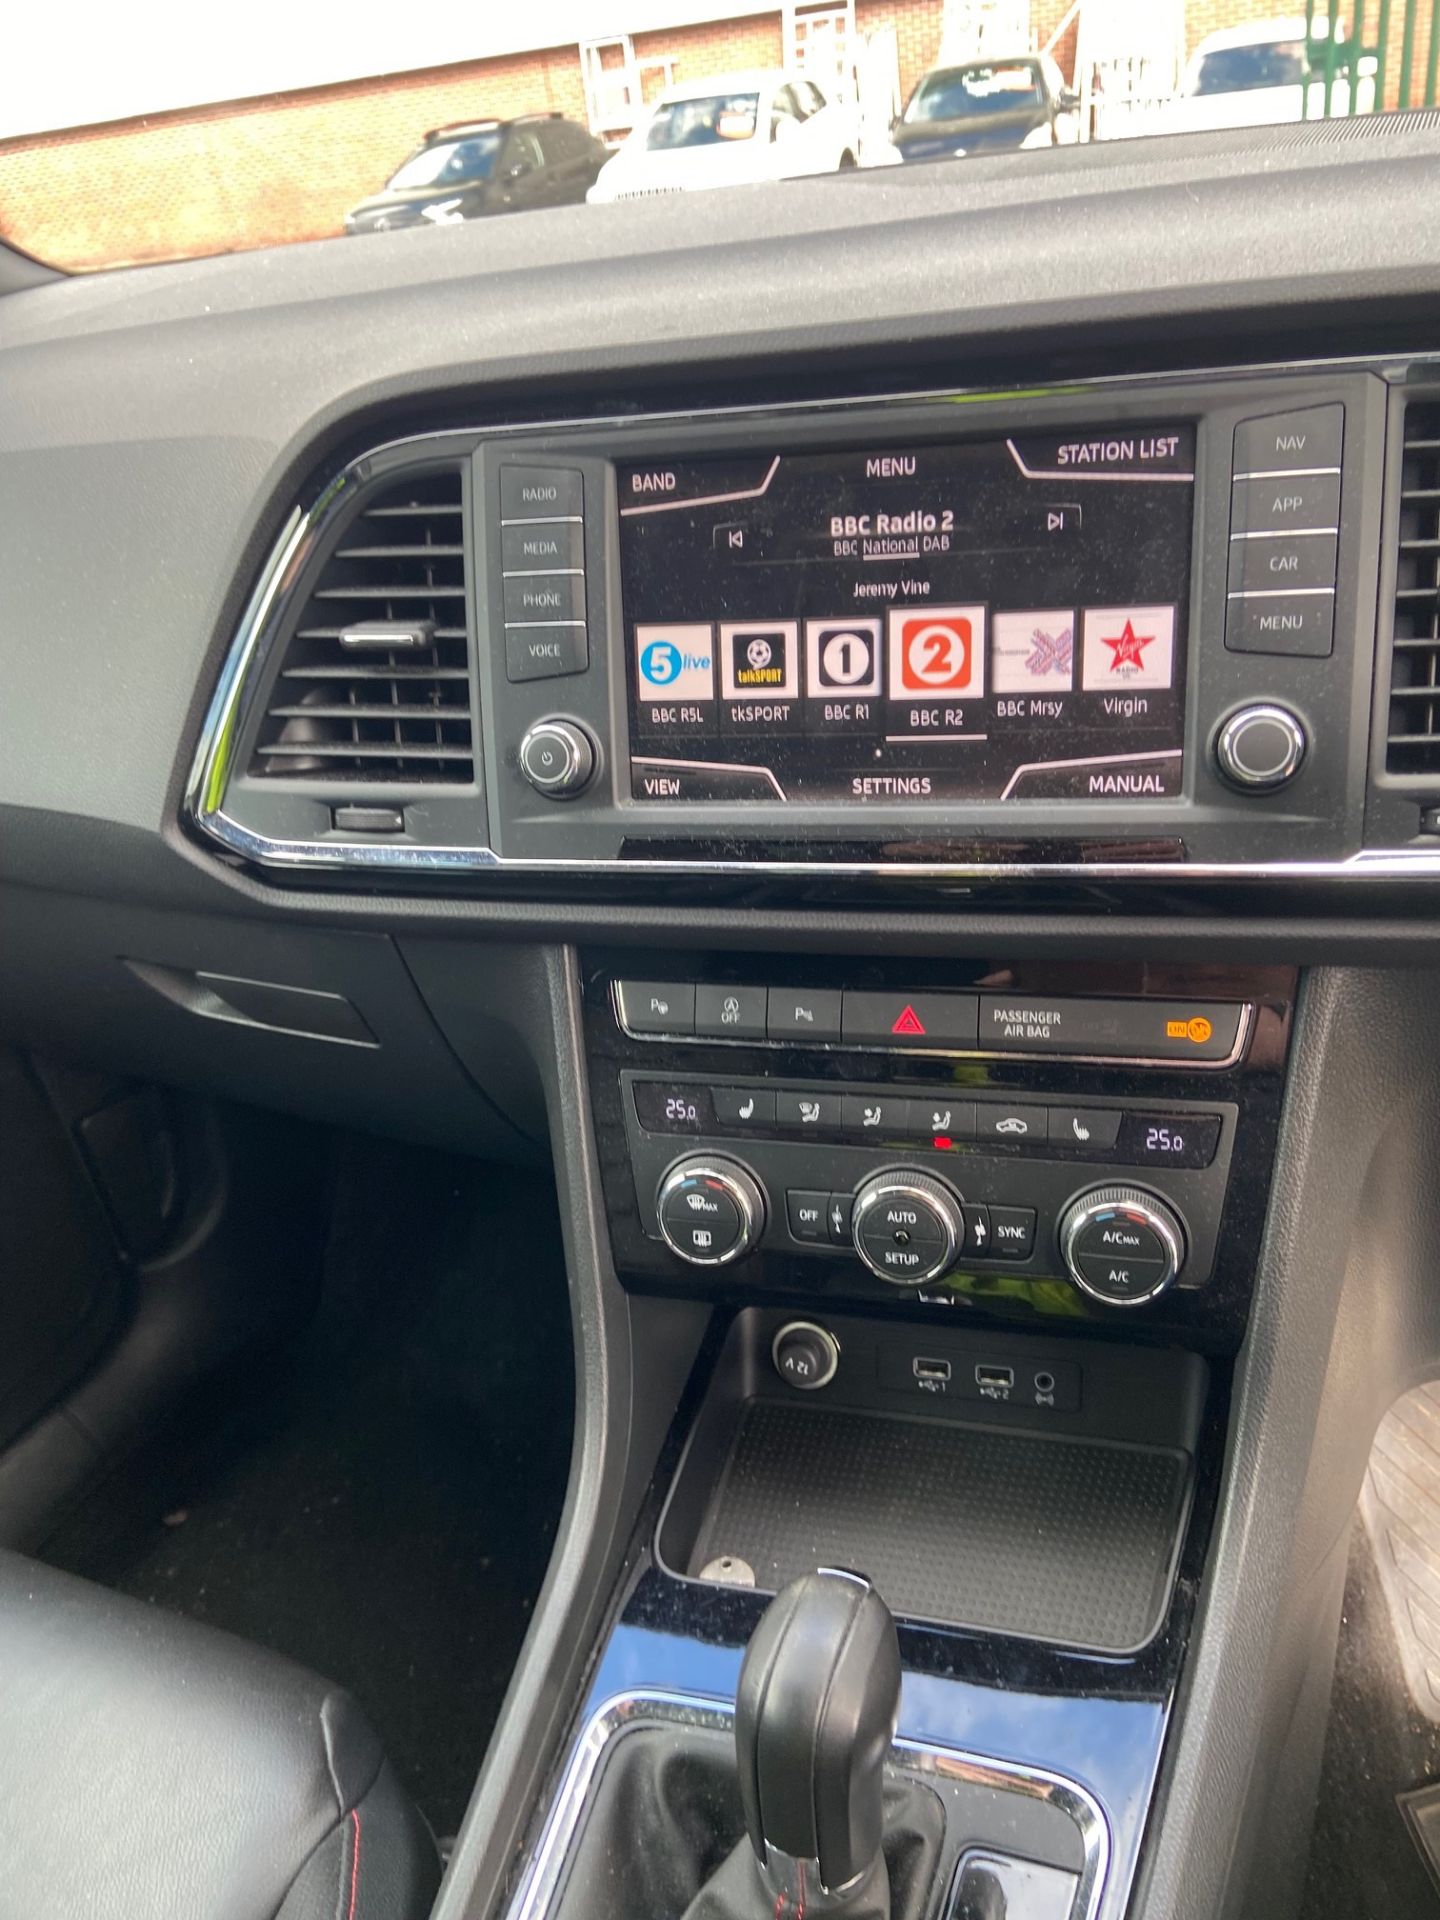 SEAT ATECA (YOM 2019) FR SPORT TSi 4 DRIVE 2.0 five door hatchback - petrol - black. - Bild 8 aus 13